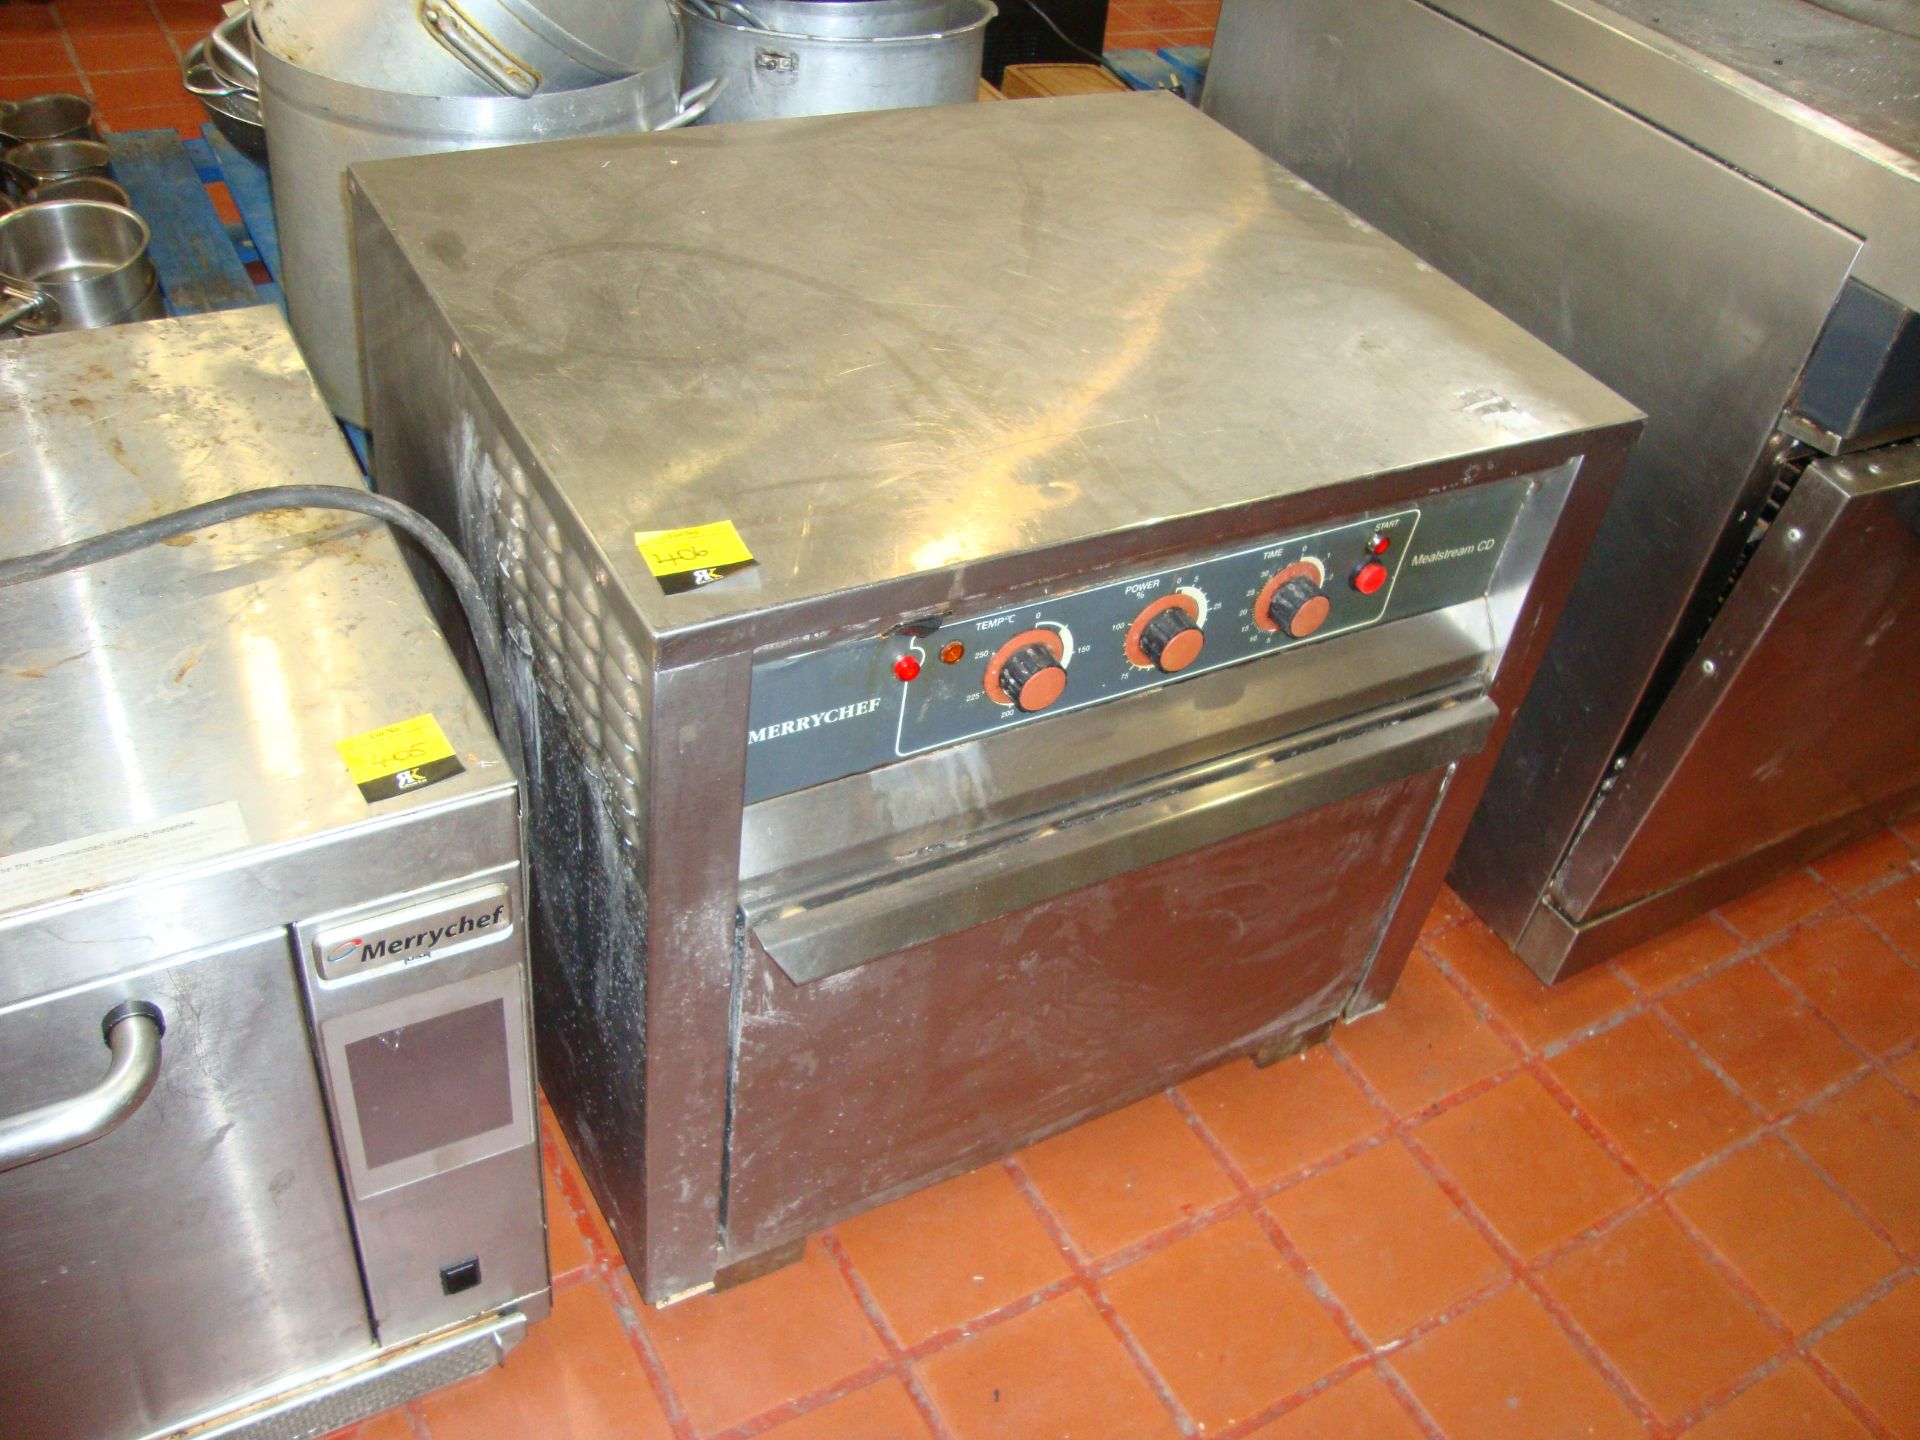 Merrychef Mealstream multifunction oven - Image 2 of 4